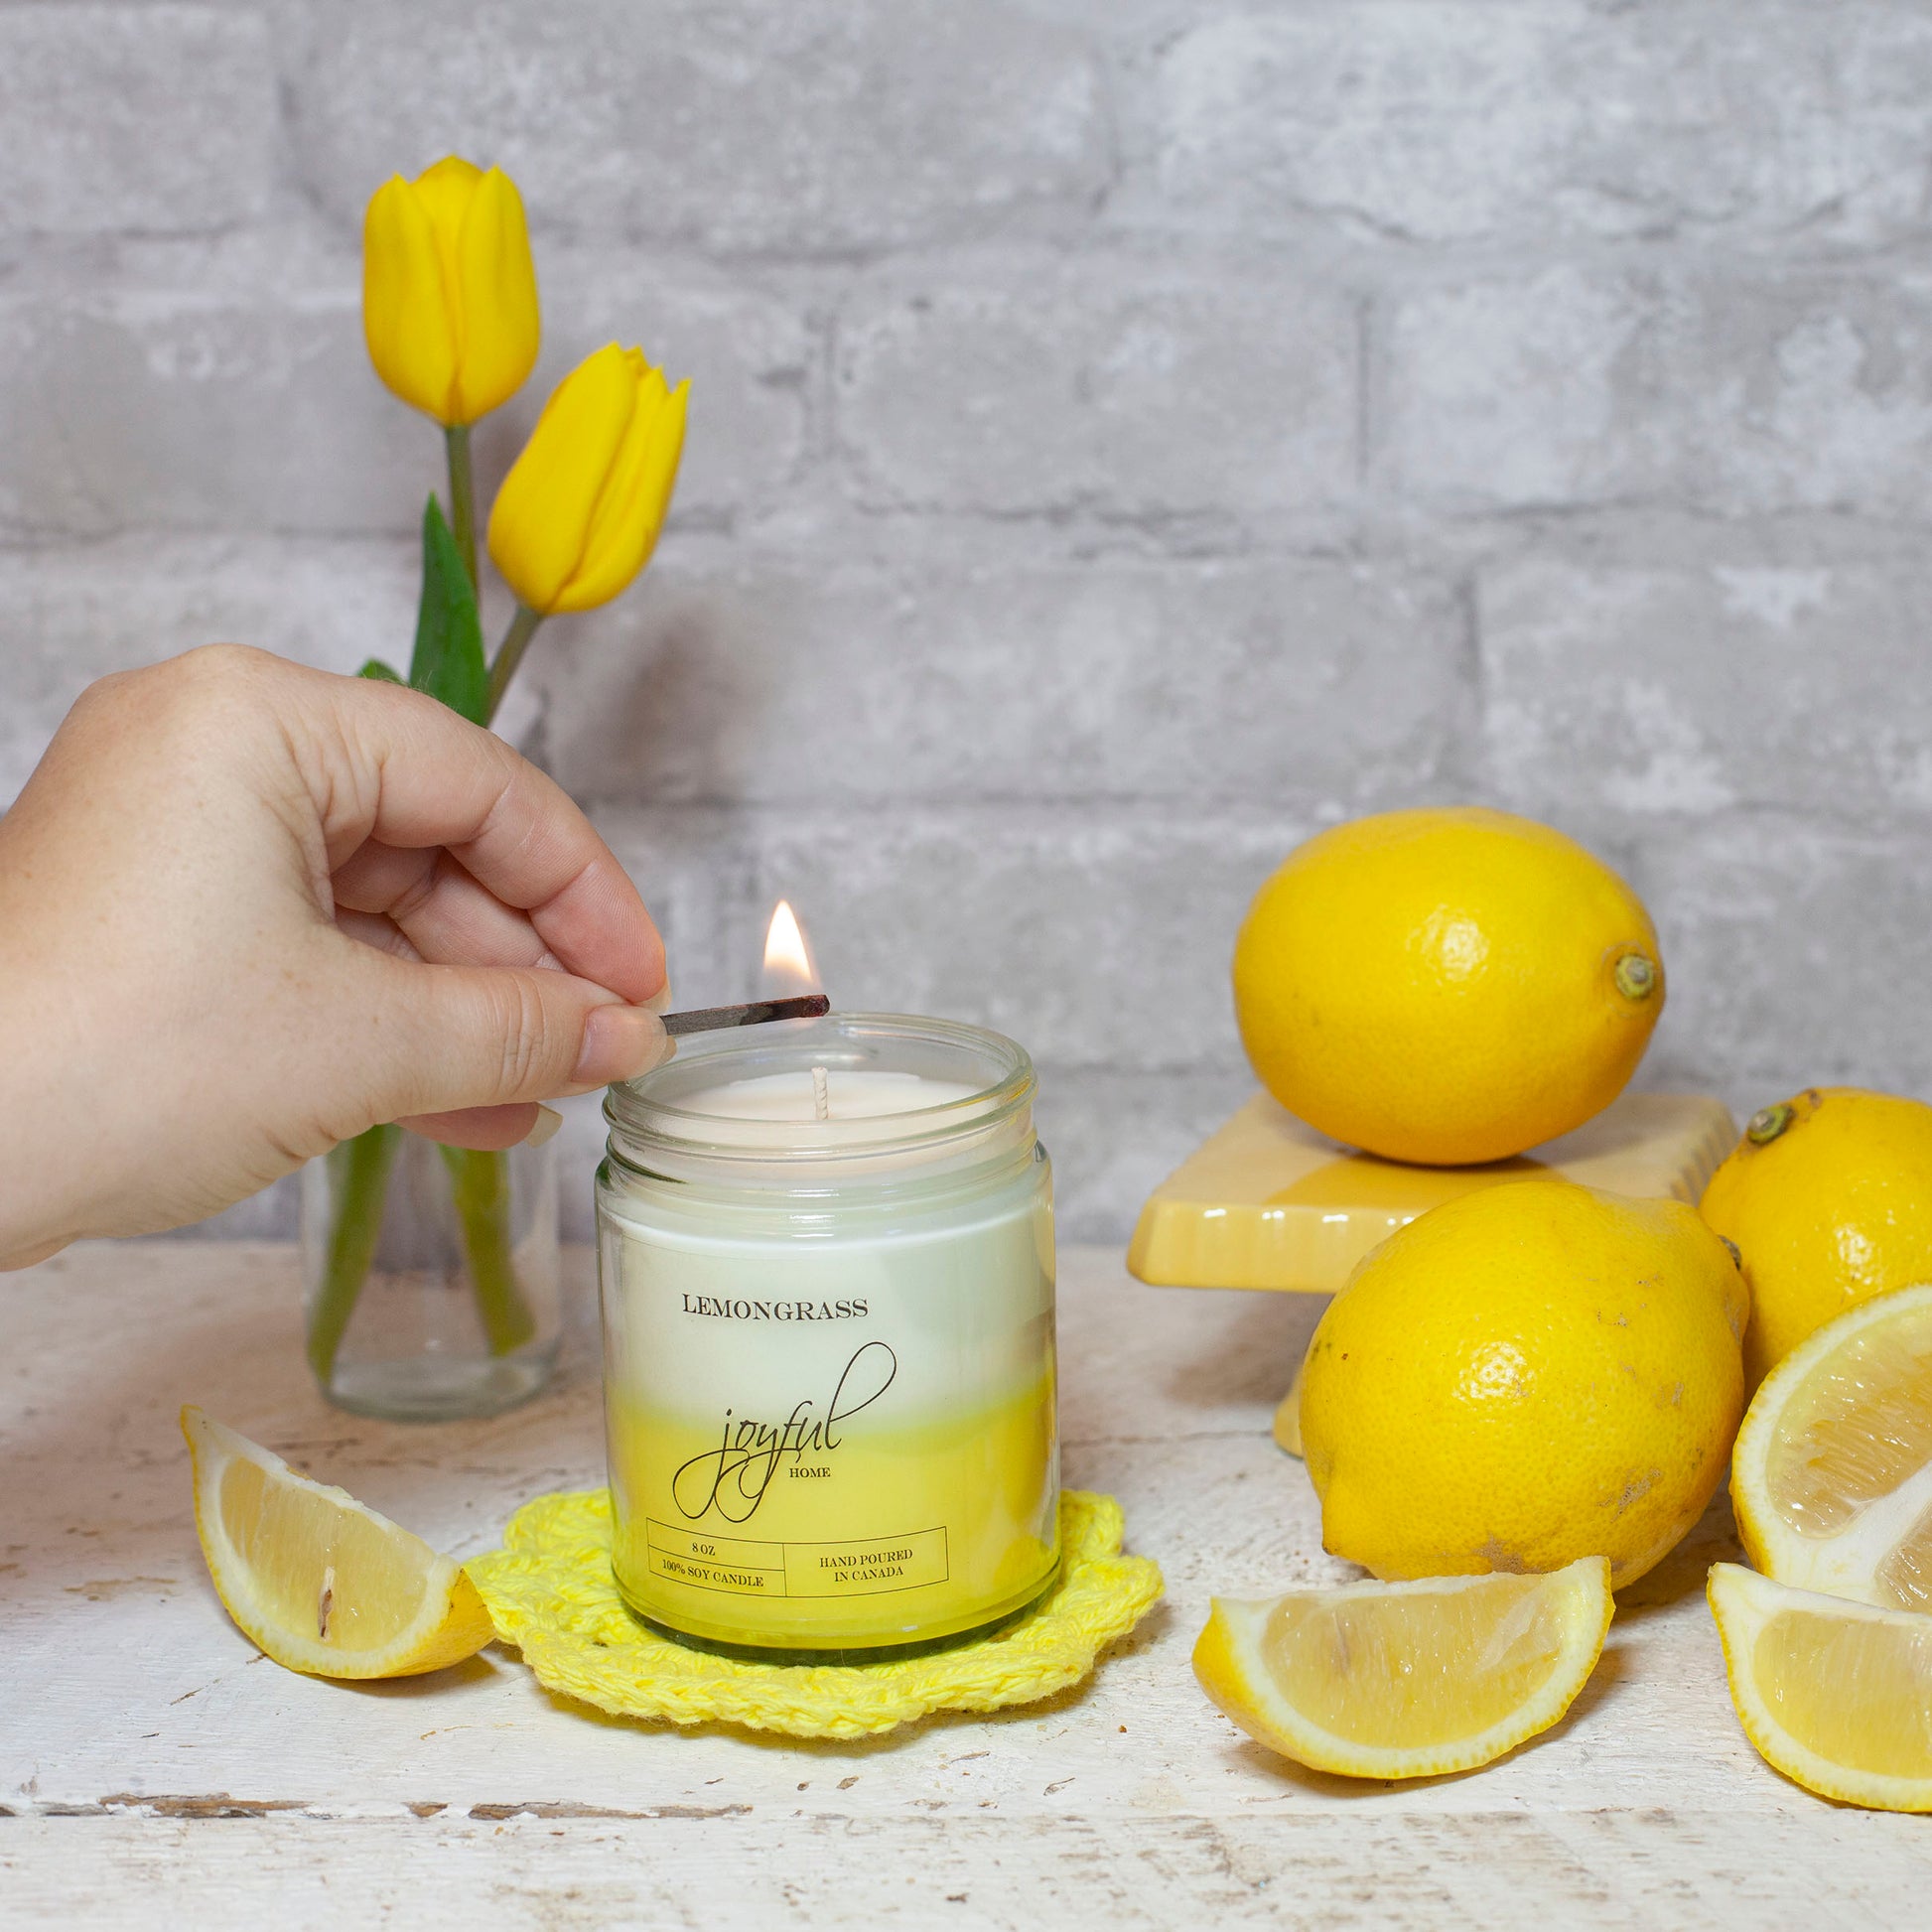 Lemongrass Soy Candle - Joyful Home Inc.